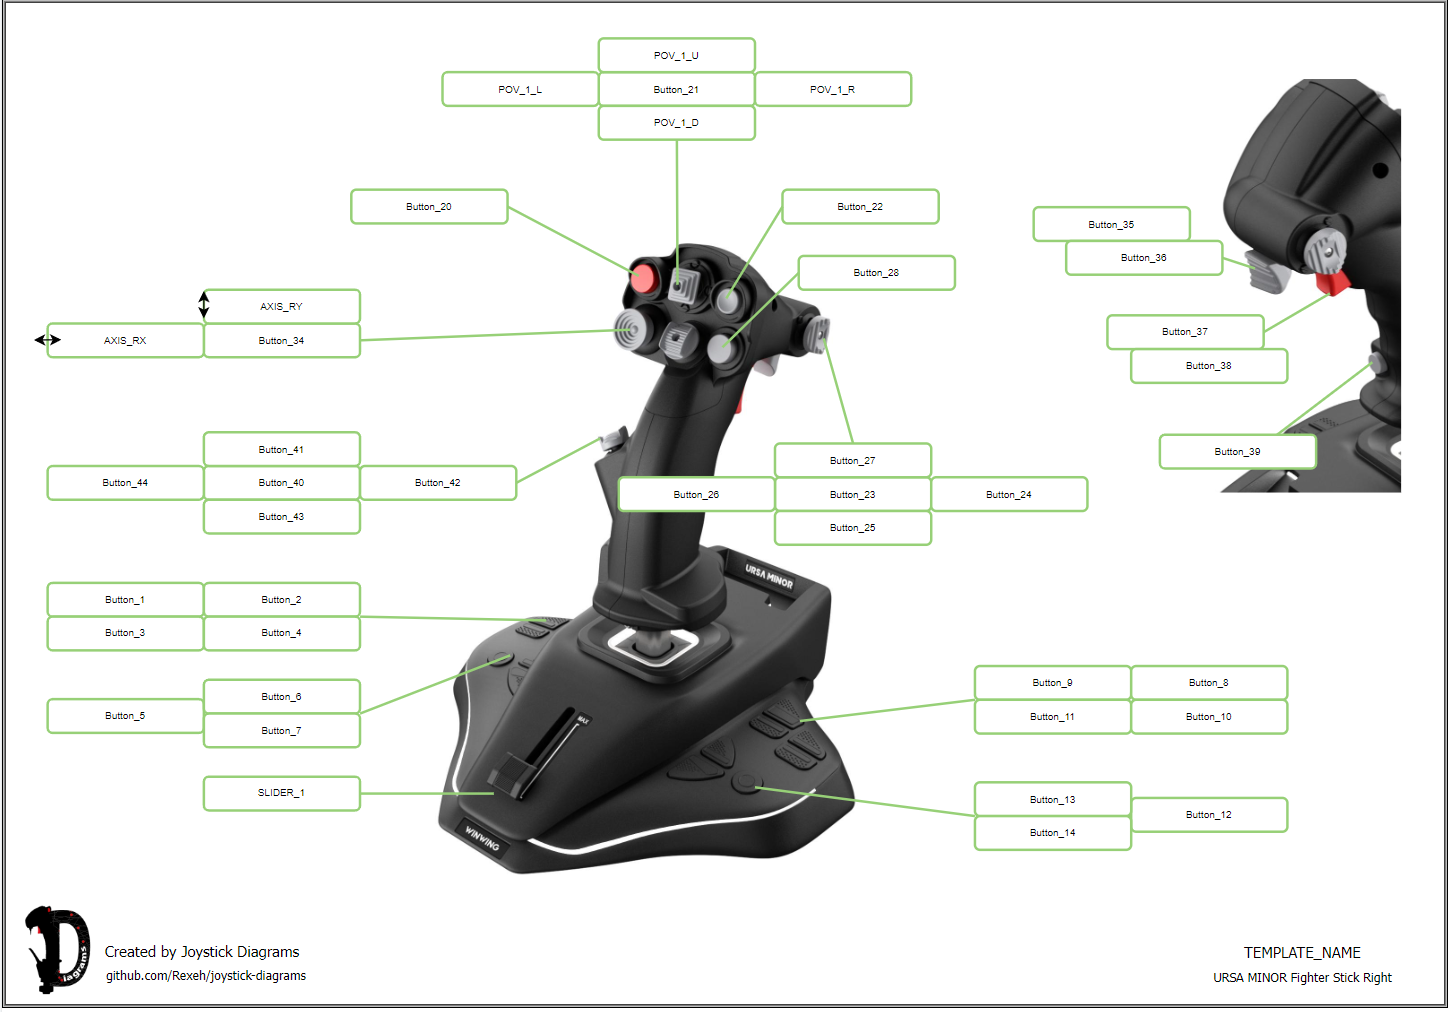 WINWING URSA Minor Fighter Joystick - Right Handed - AXIS POV (joystick-diagrams.com)